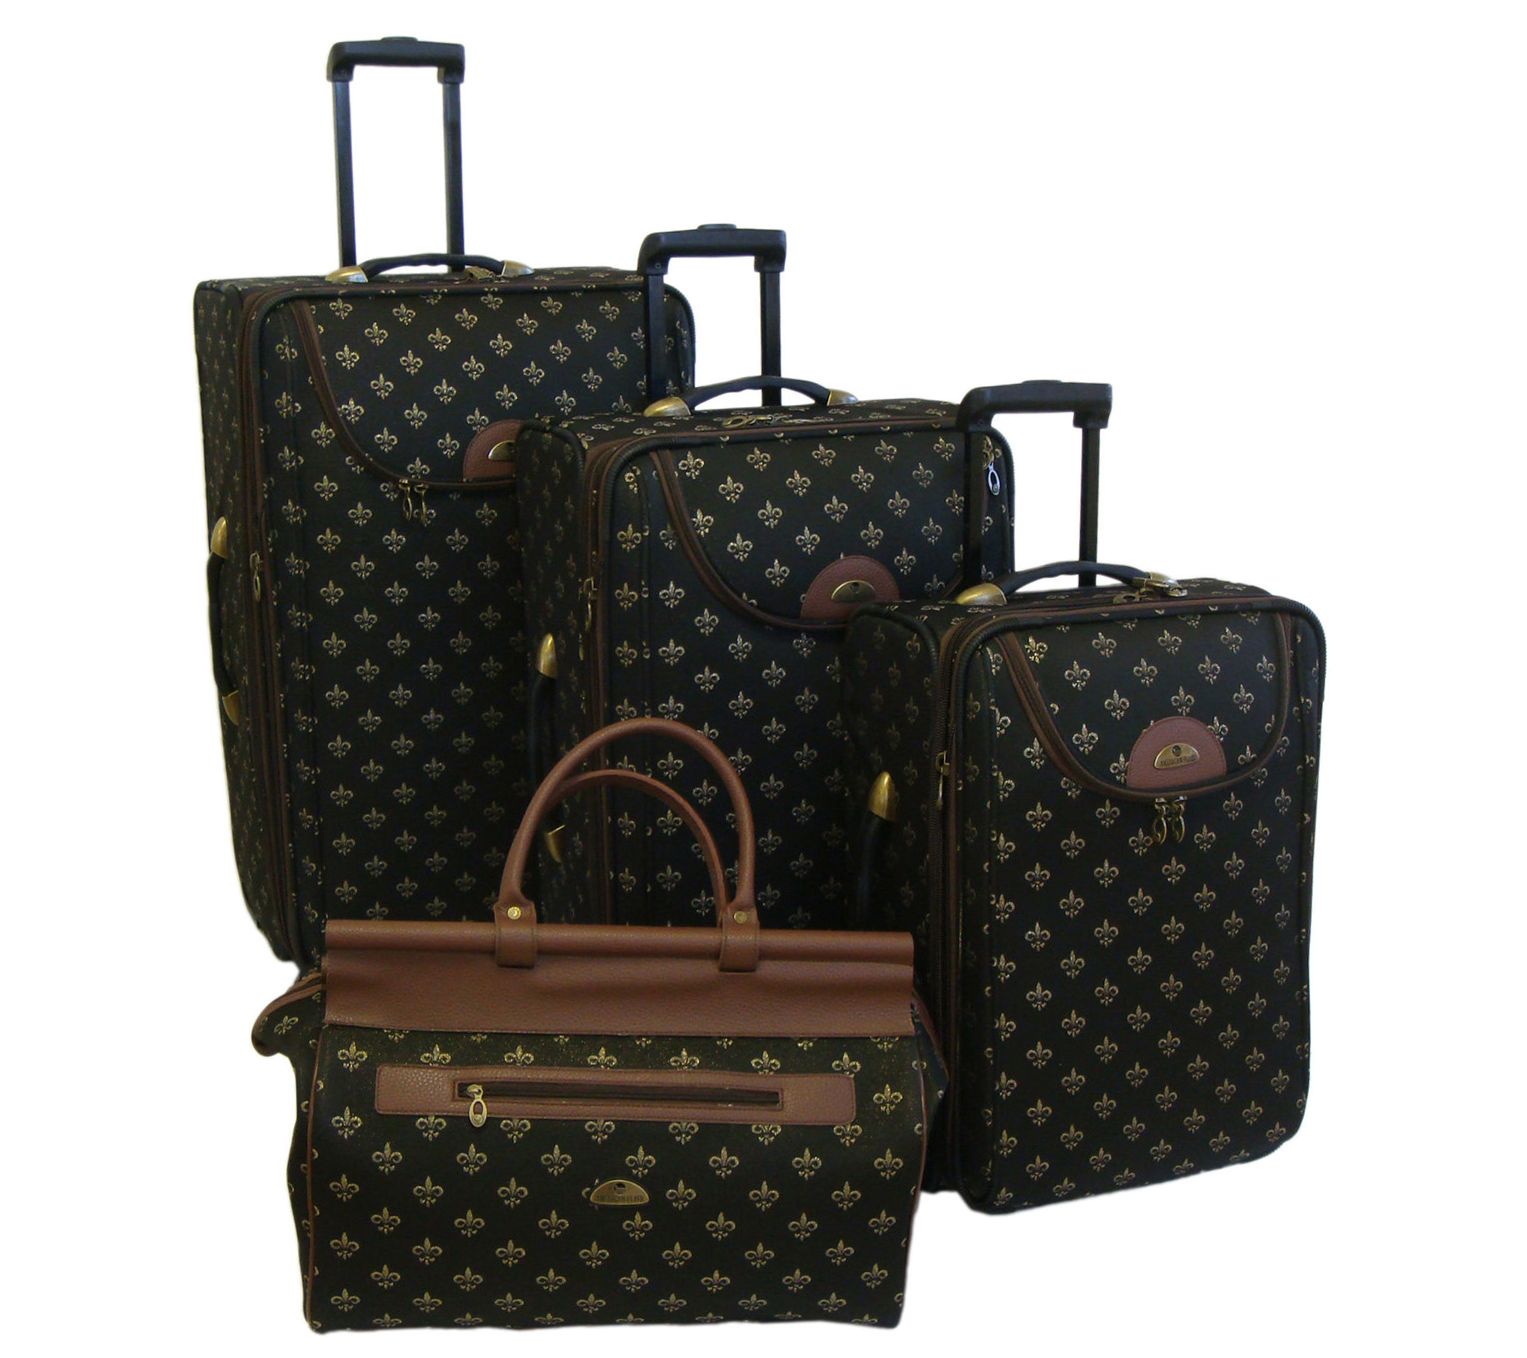 price of louis vuitton luggage set